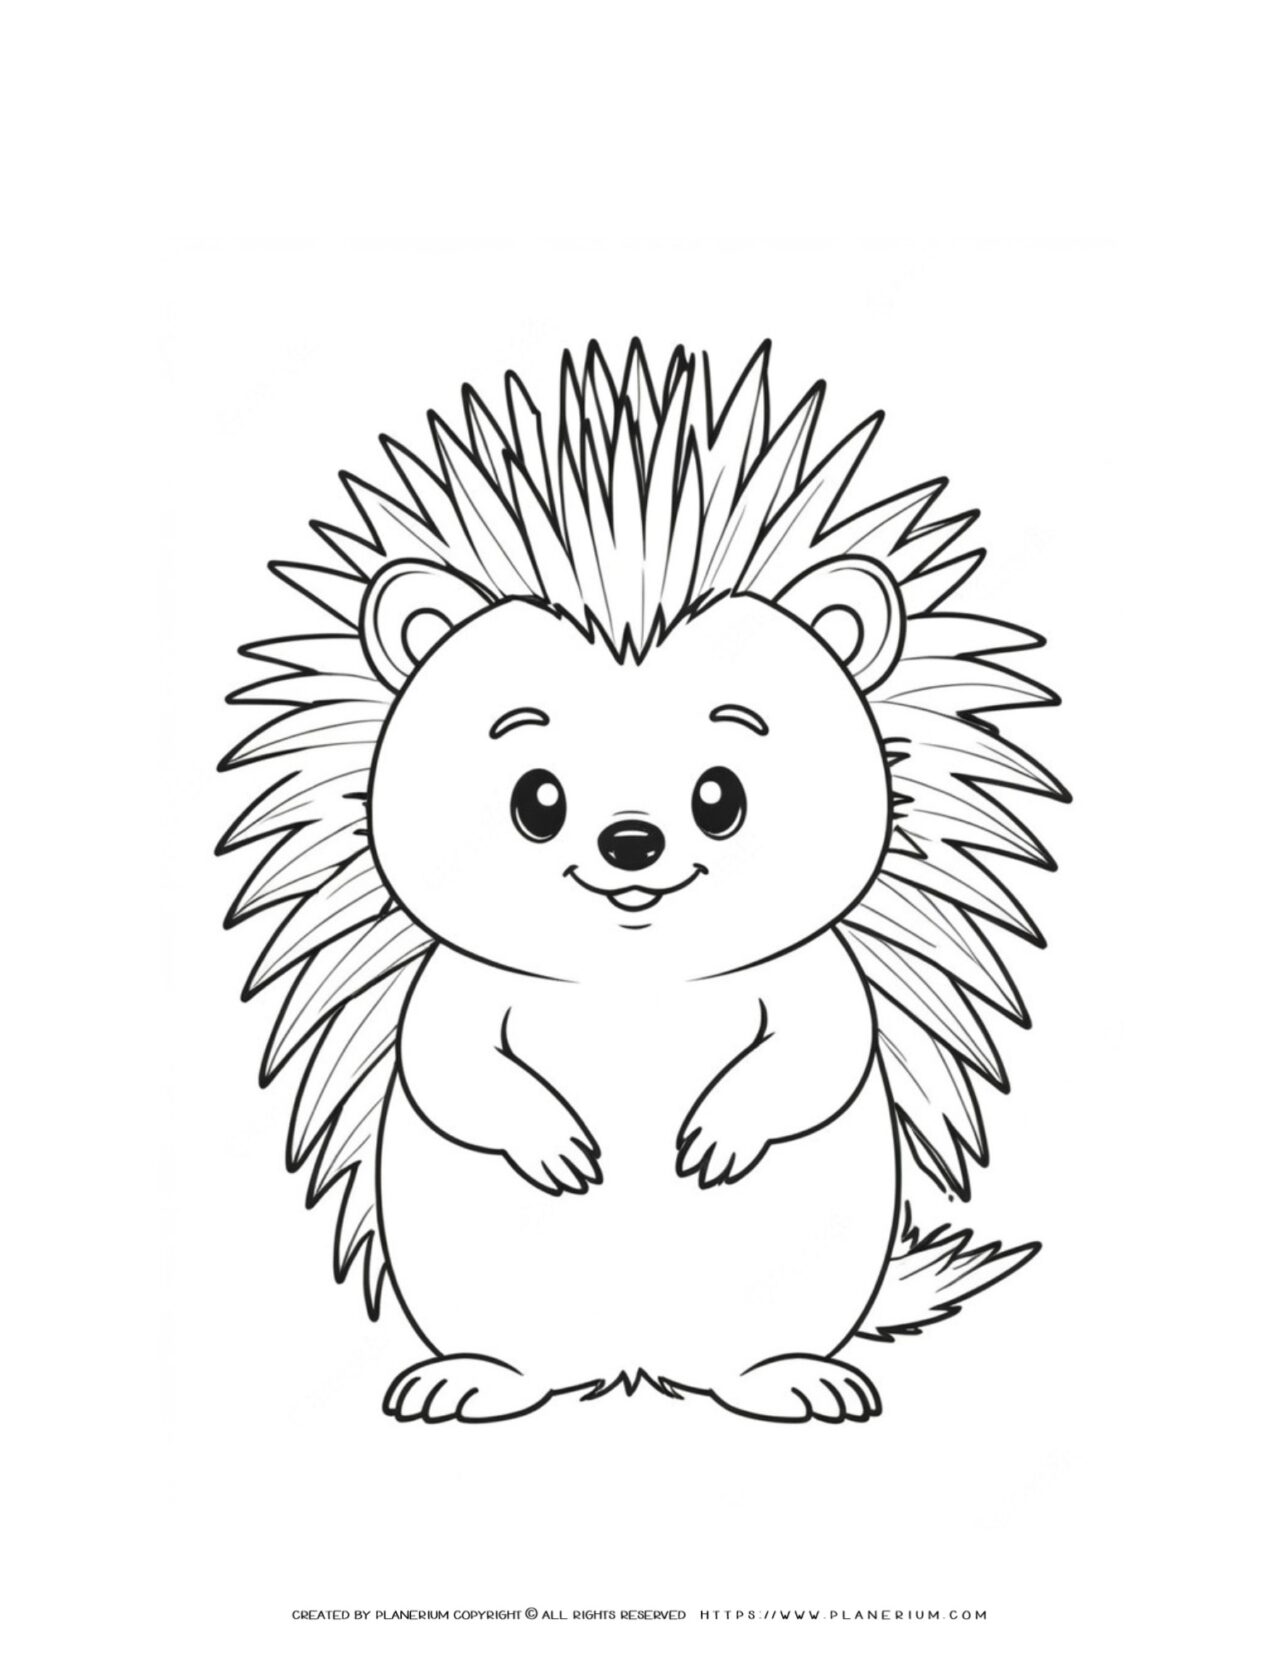 cute-porcupine-outline-illustration-coloring-page-for-kids